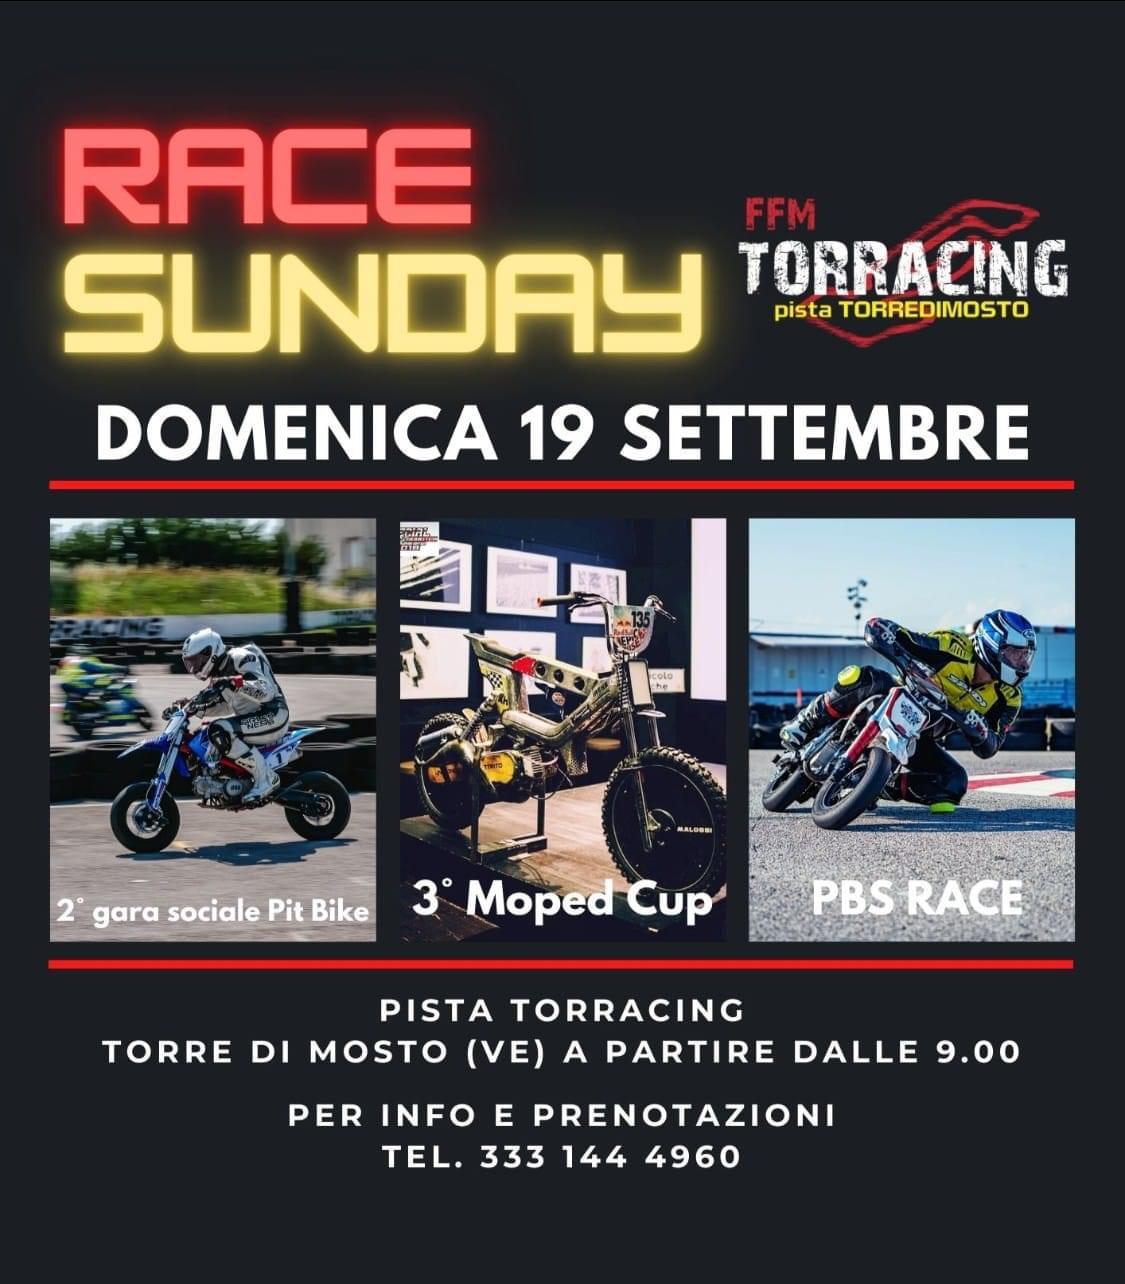 Race Sunday FFM Torracing